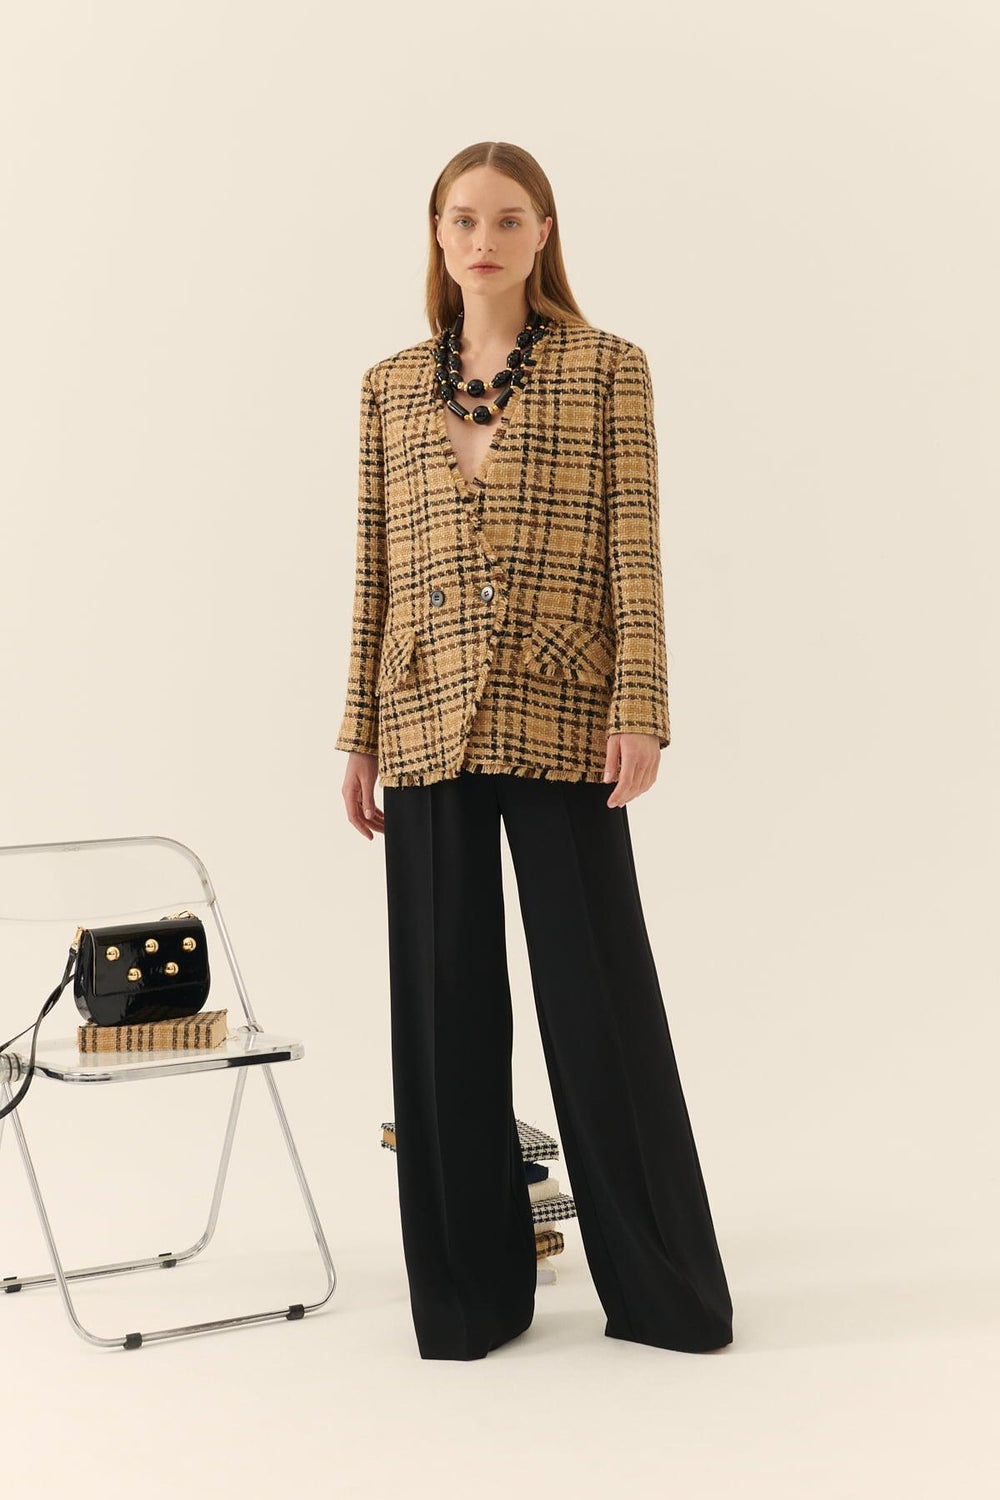 Women's Outwear- Jackets, Coats & Blazers | ROMAN USA